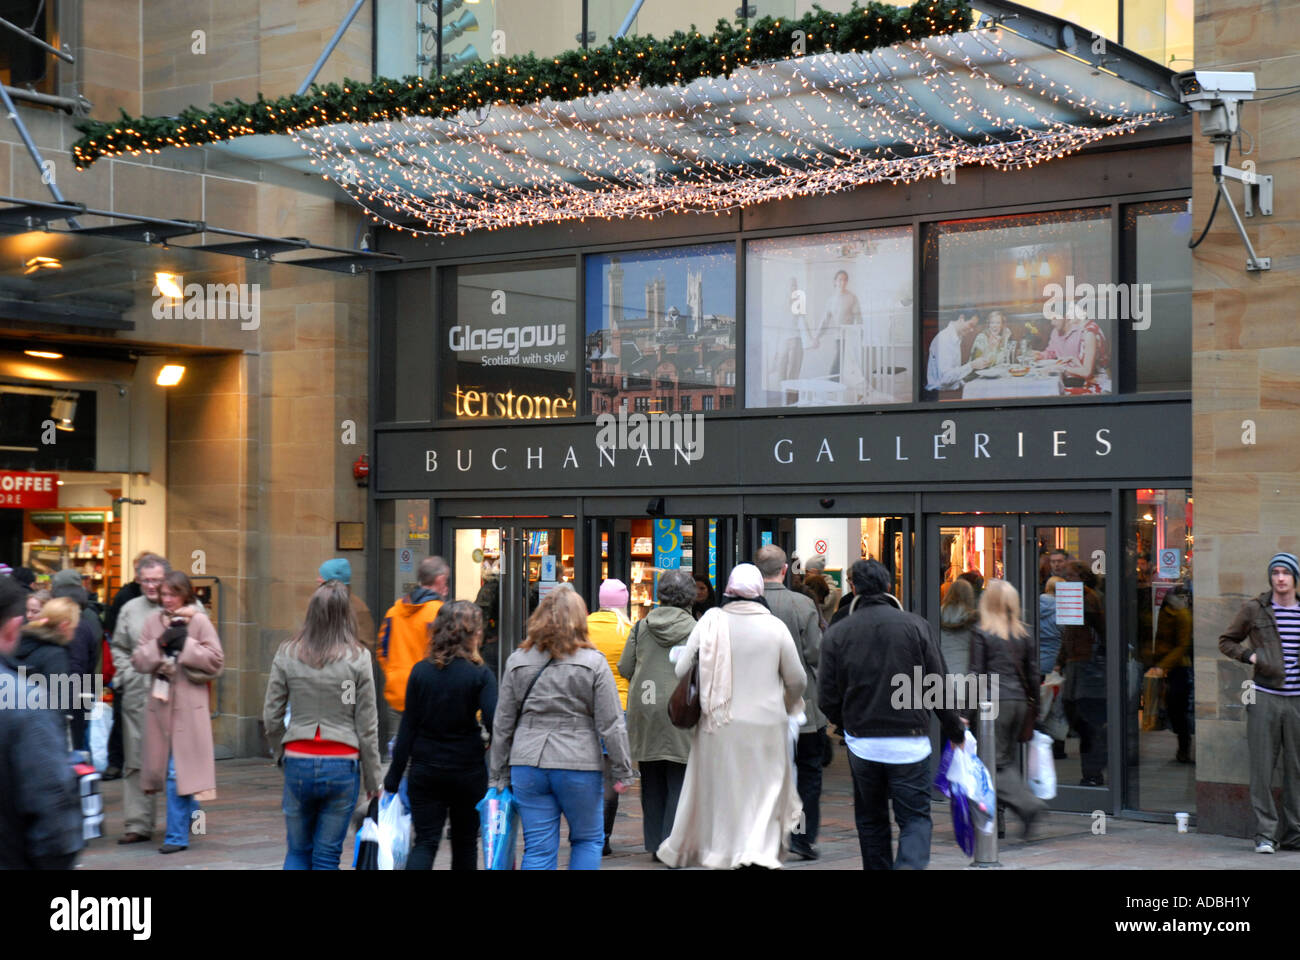 Last Minute Shopping on Christmas Eve, Buchanan Galleries Shopping Mall. Buchanan Street. Glasgow, Scotland. Stock Photo